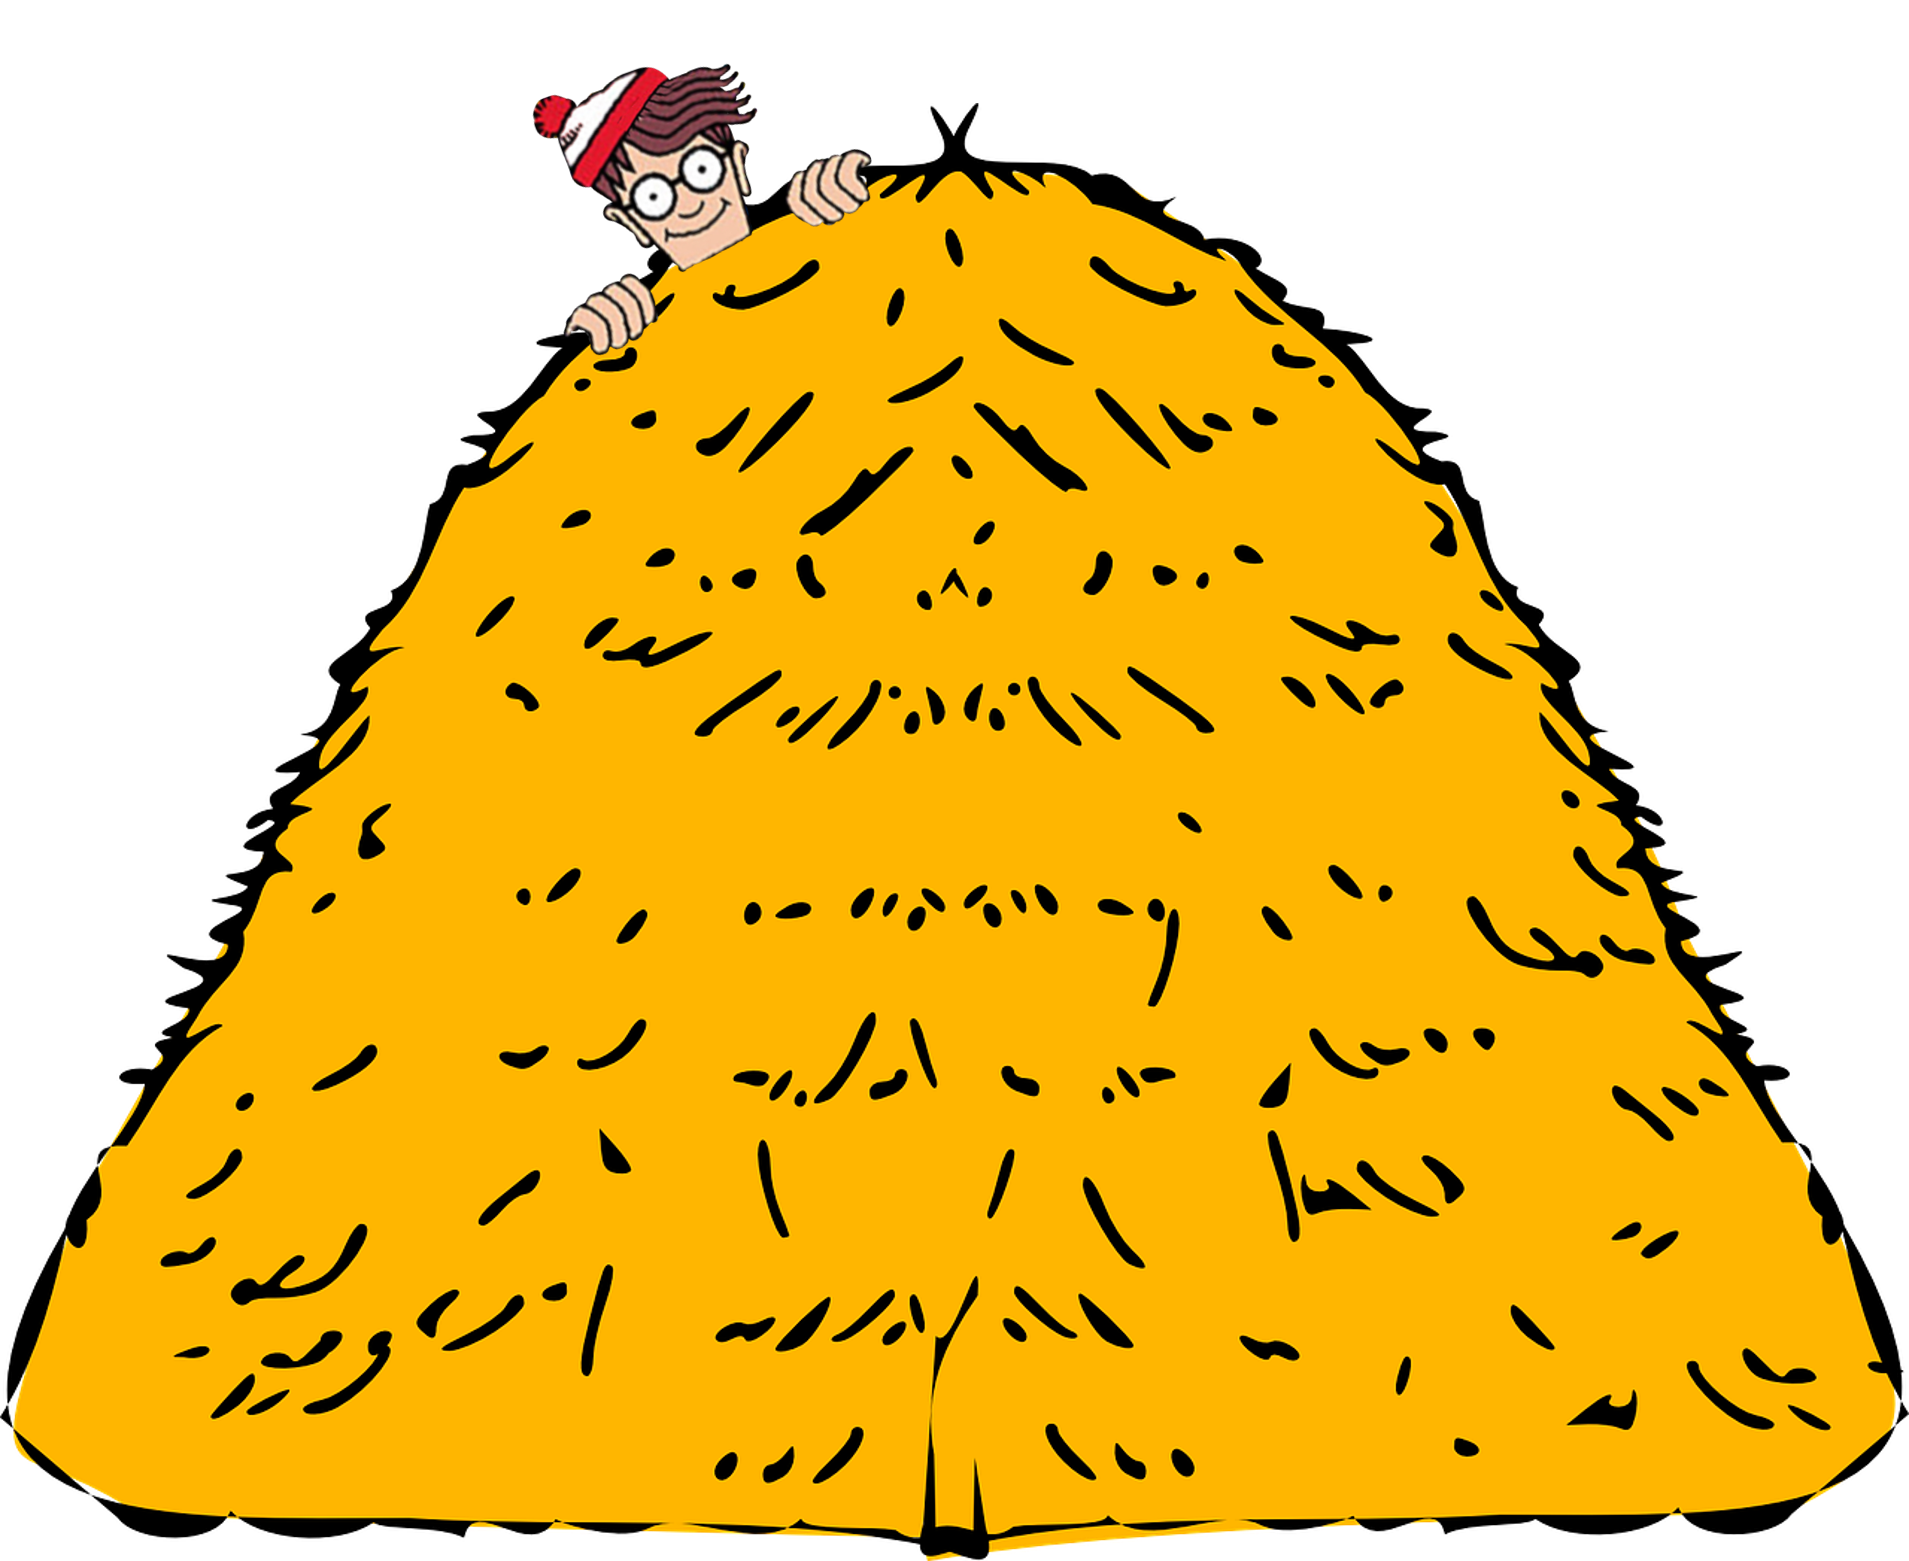 Waldo in a logstack